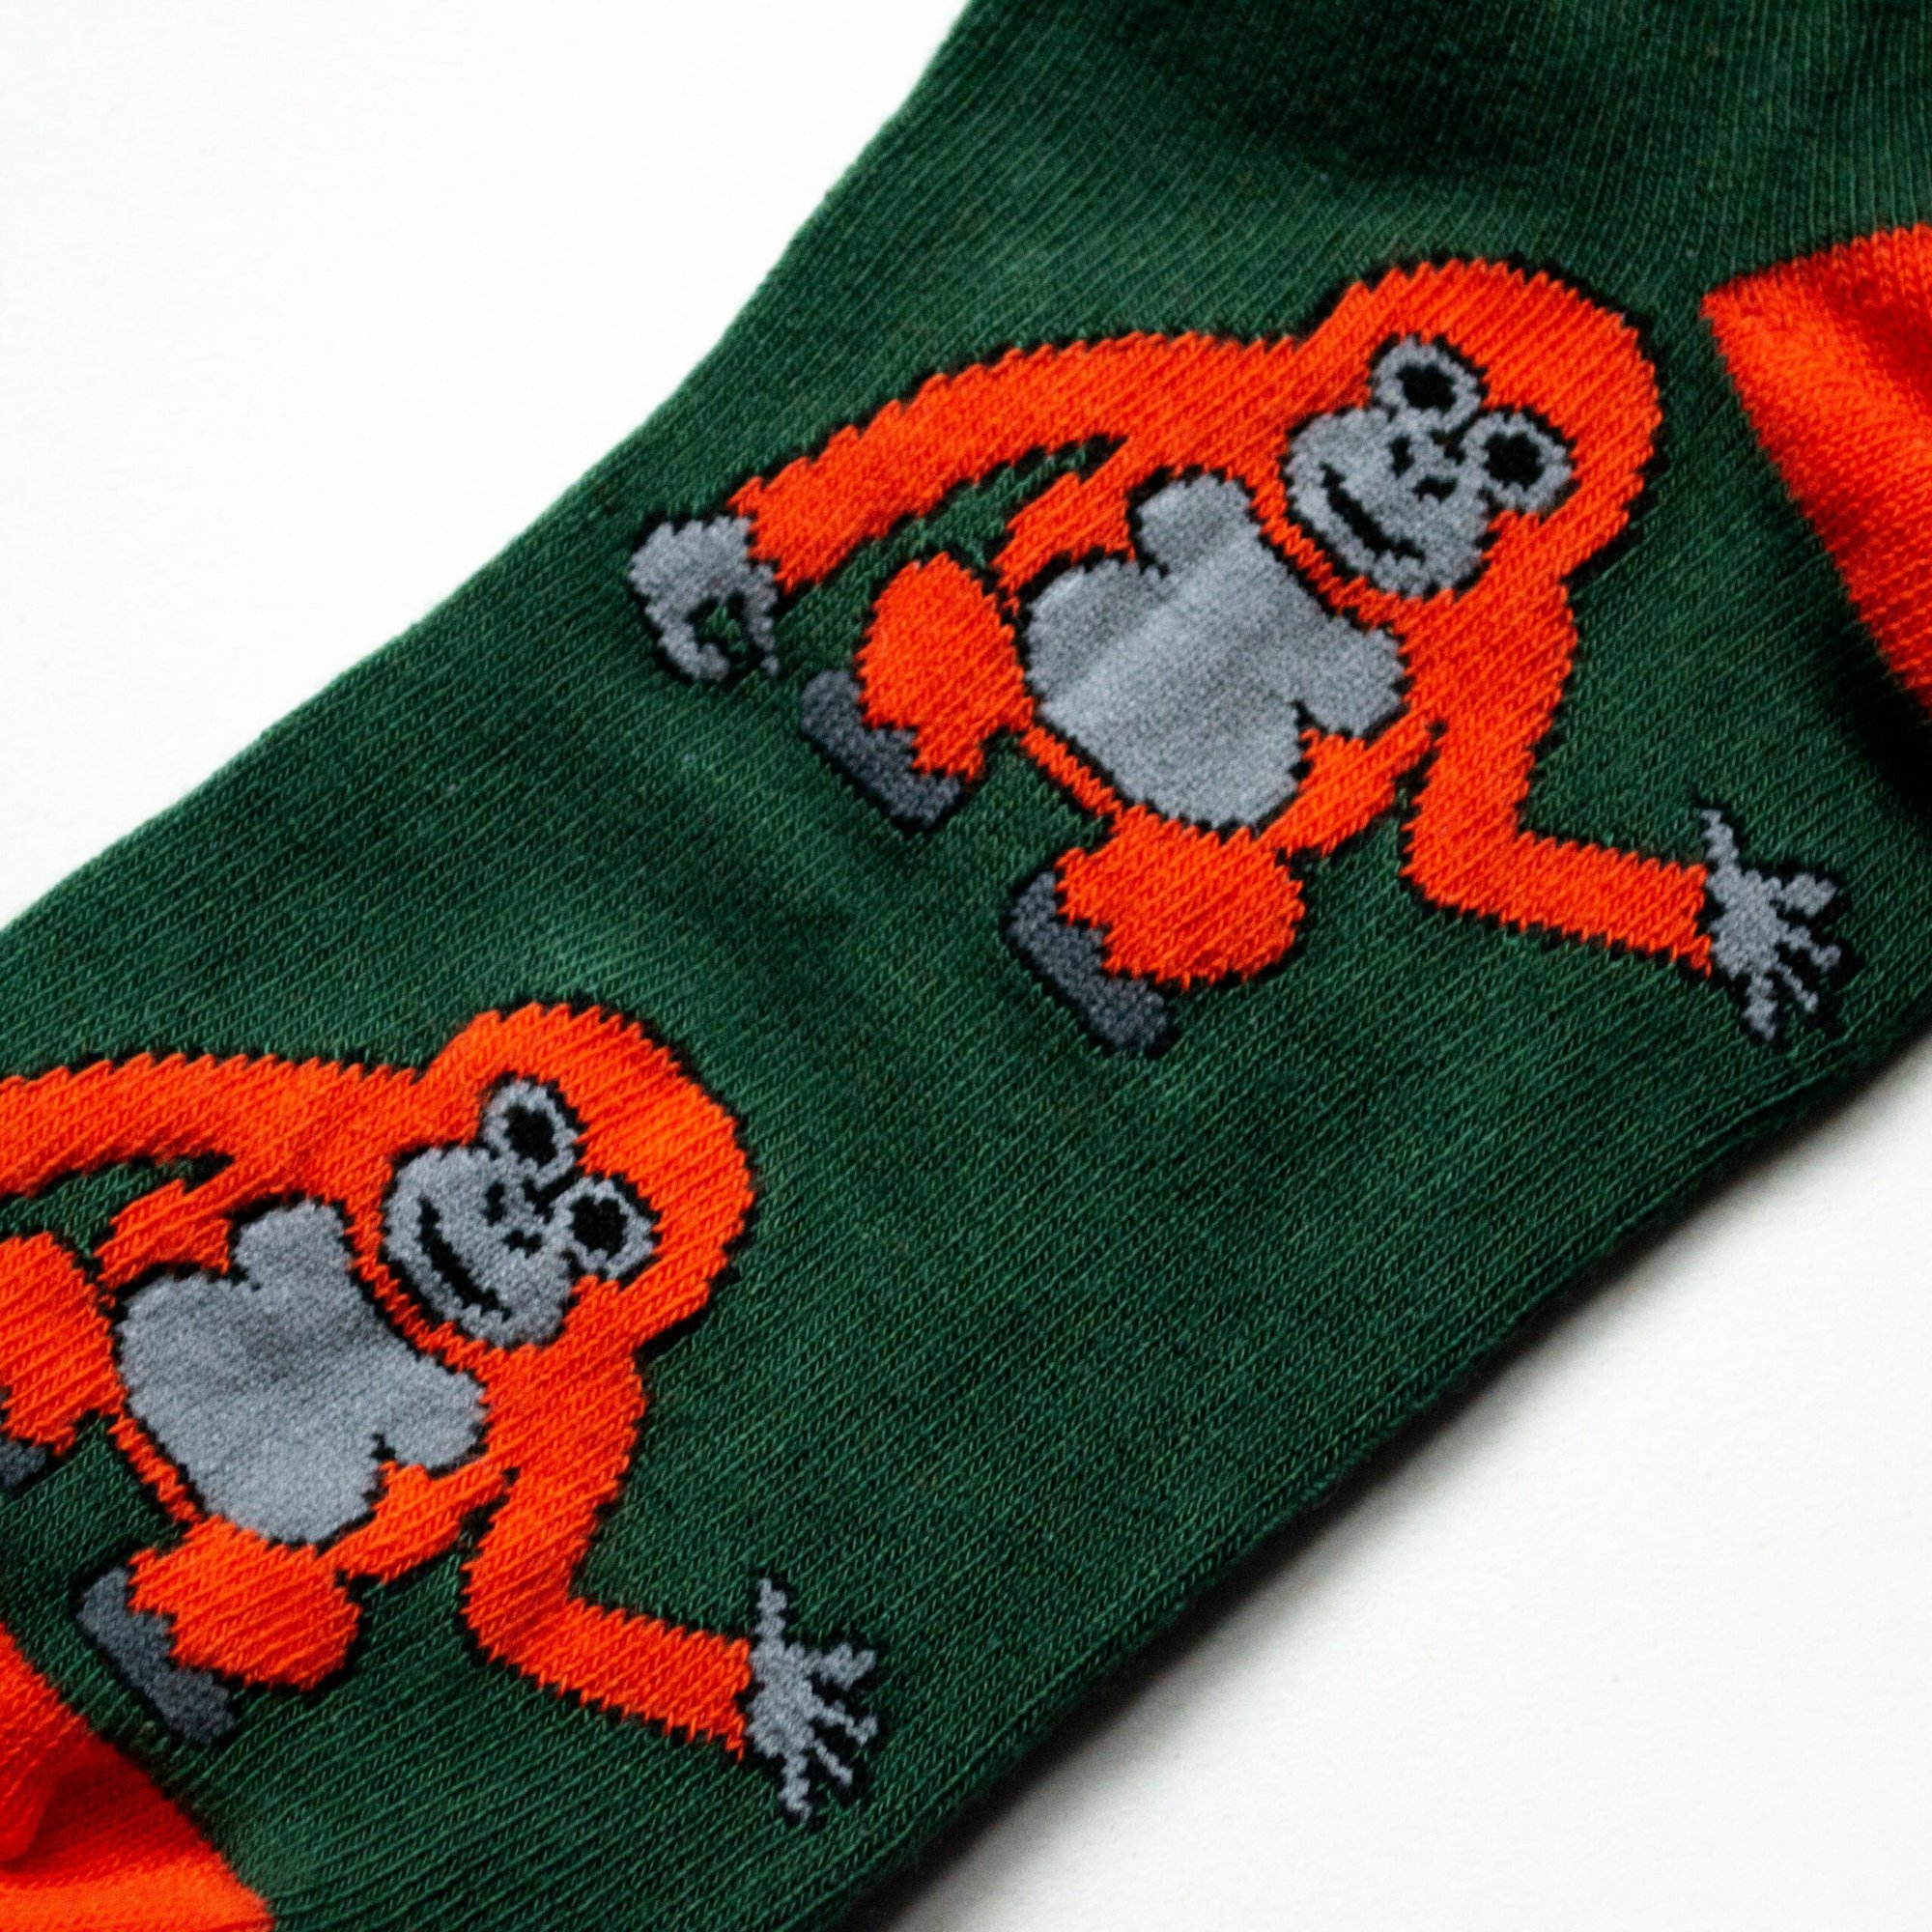 Orangutan Bamboo Trainer Socks